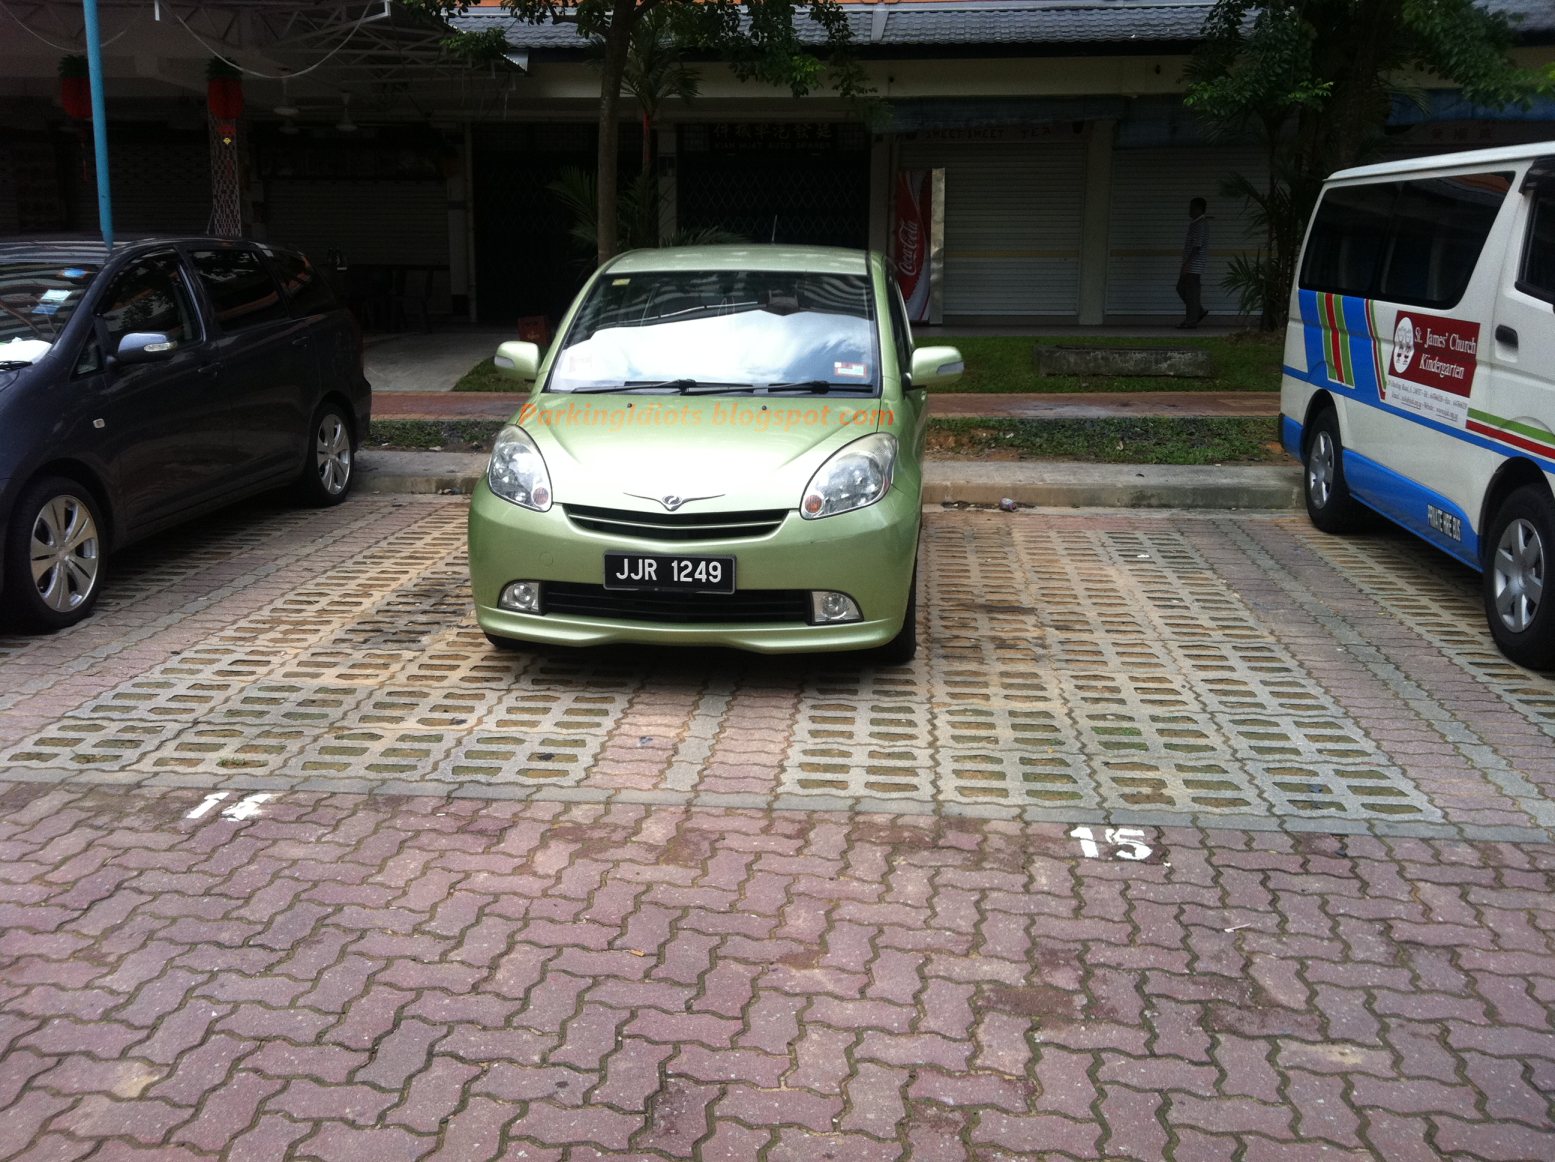 Parking Idiots in Singapore